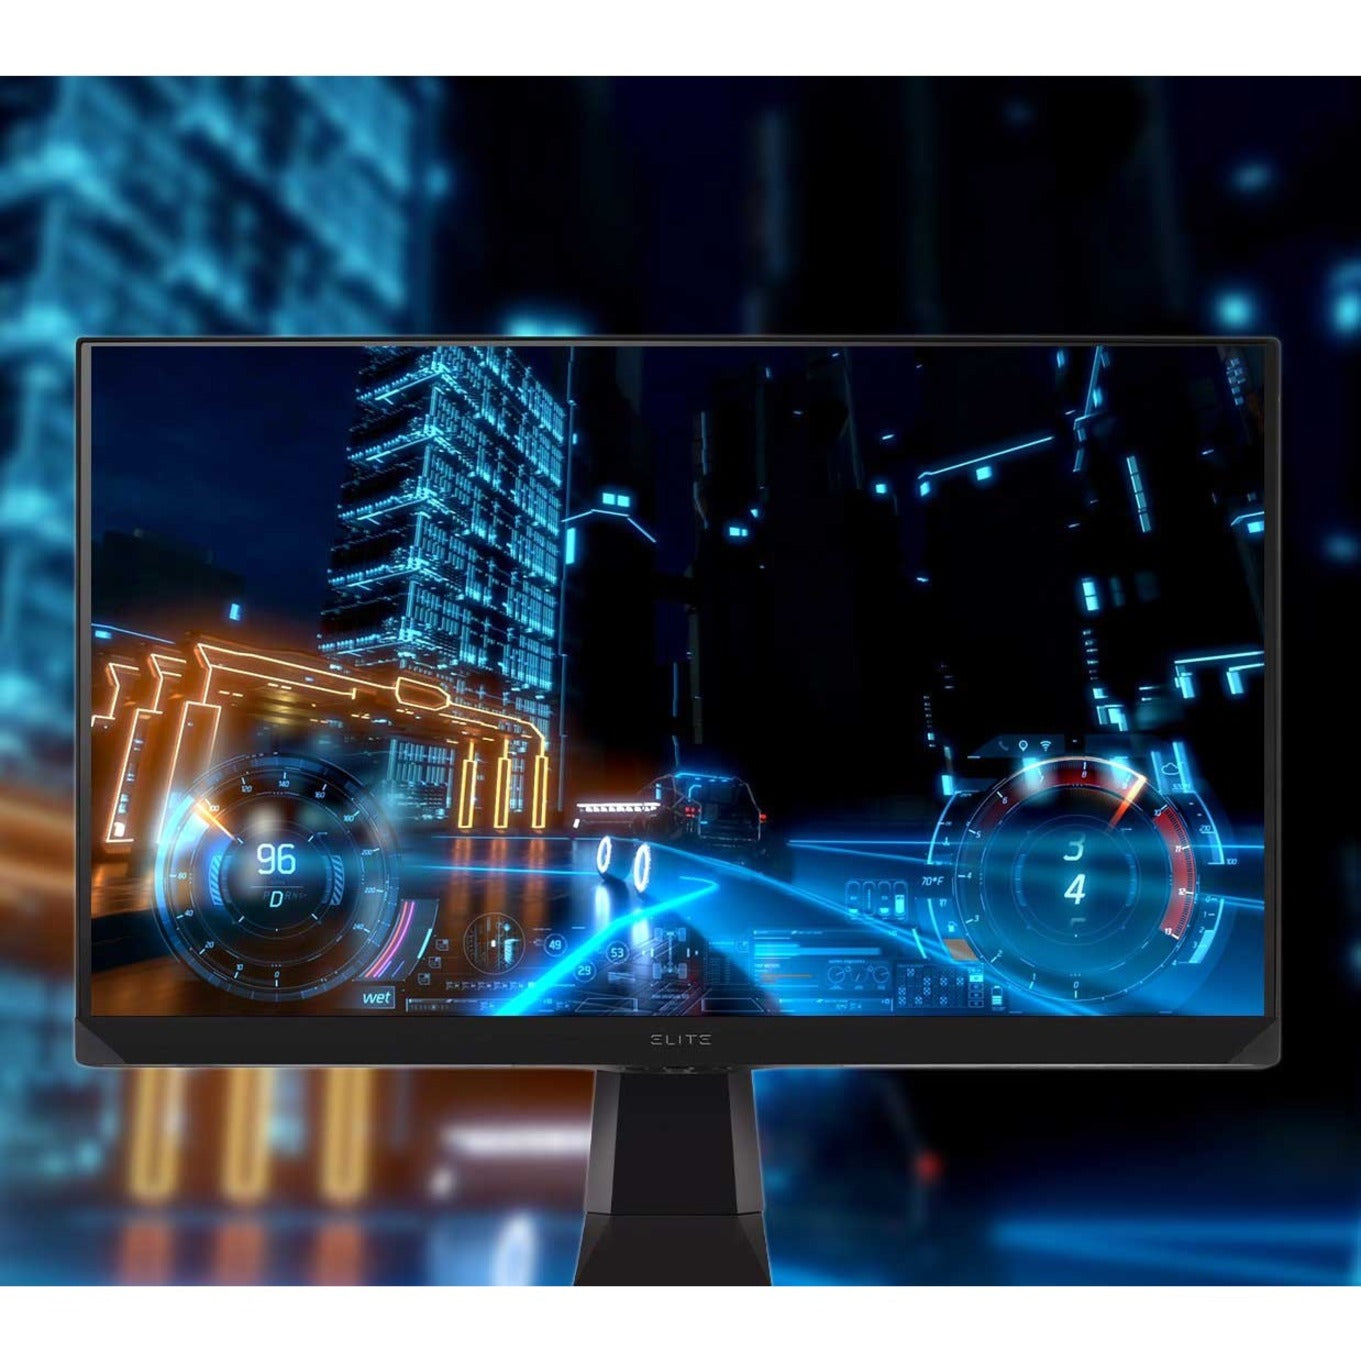 ViewSonic XG250 Elite Gaming Monitor, 25" IPS, 240Hz, 1ms, NVIDIA G-Sync Compatible, Advanced Ergonomics, RGB Lighting